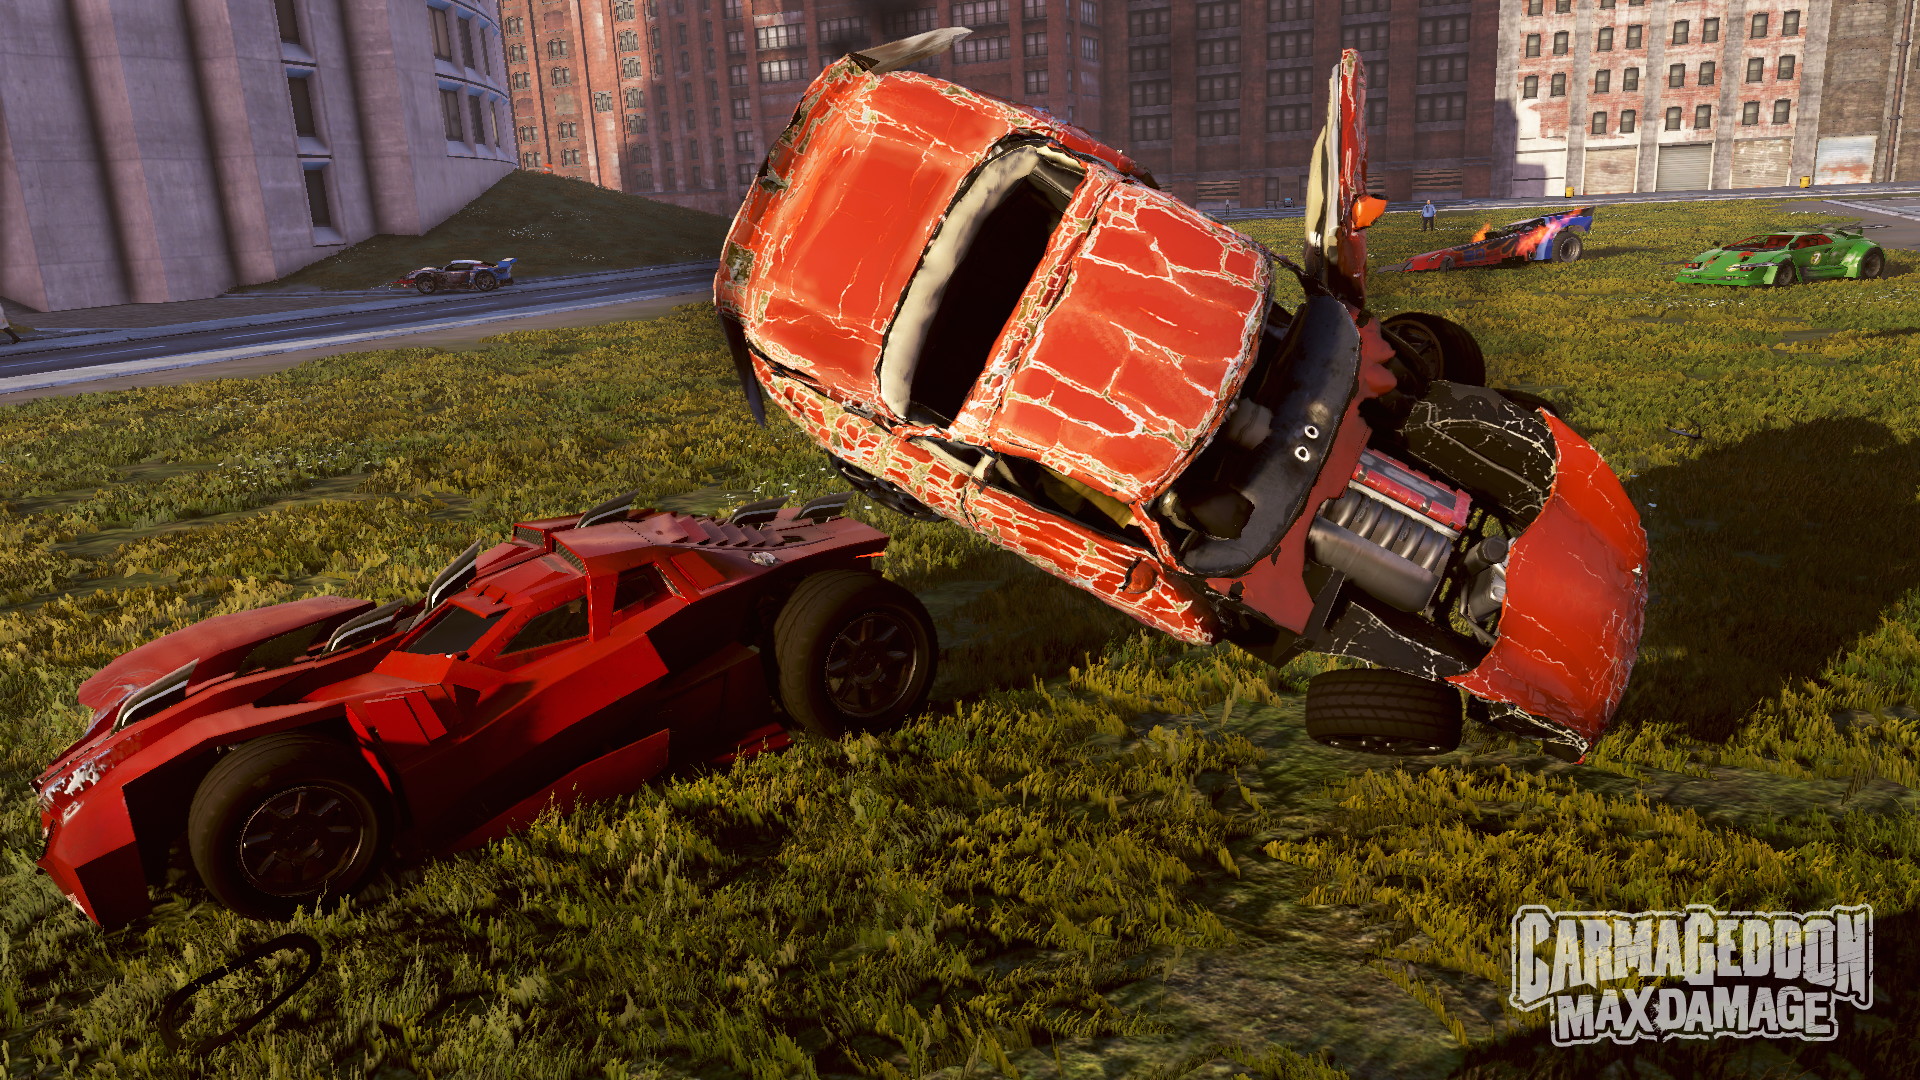 Carmageddon: Max Damage - screenshot 9